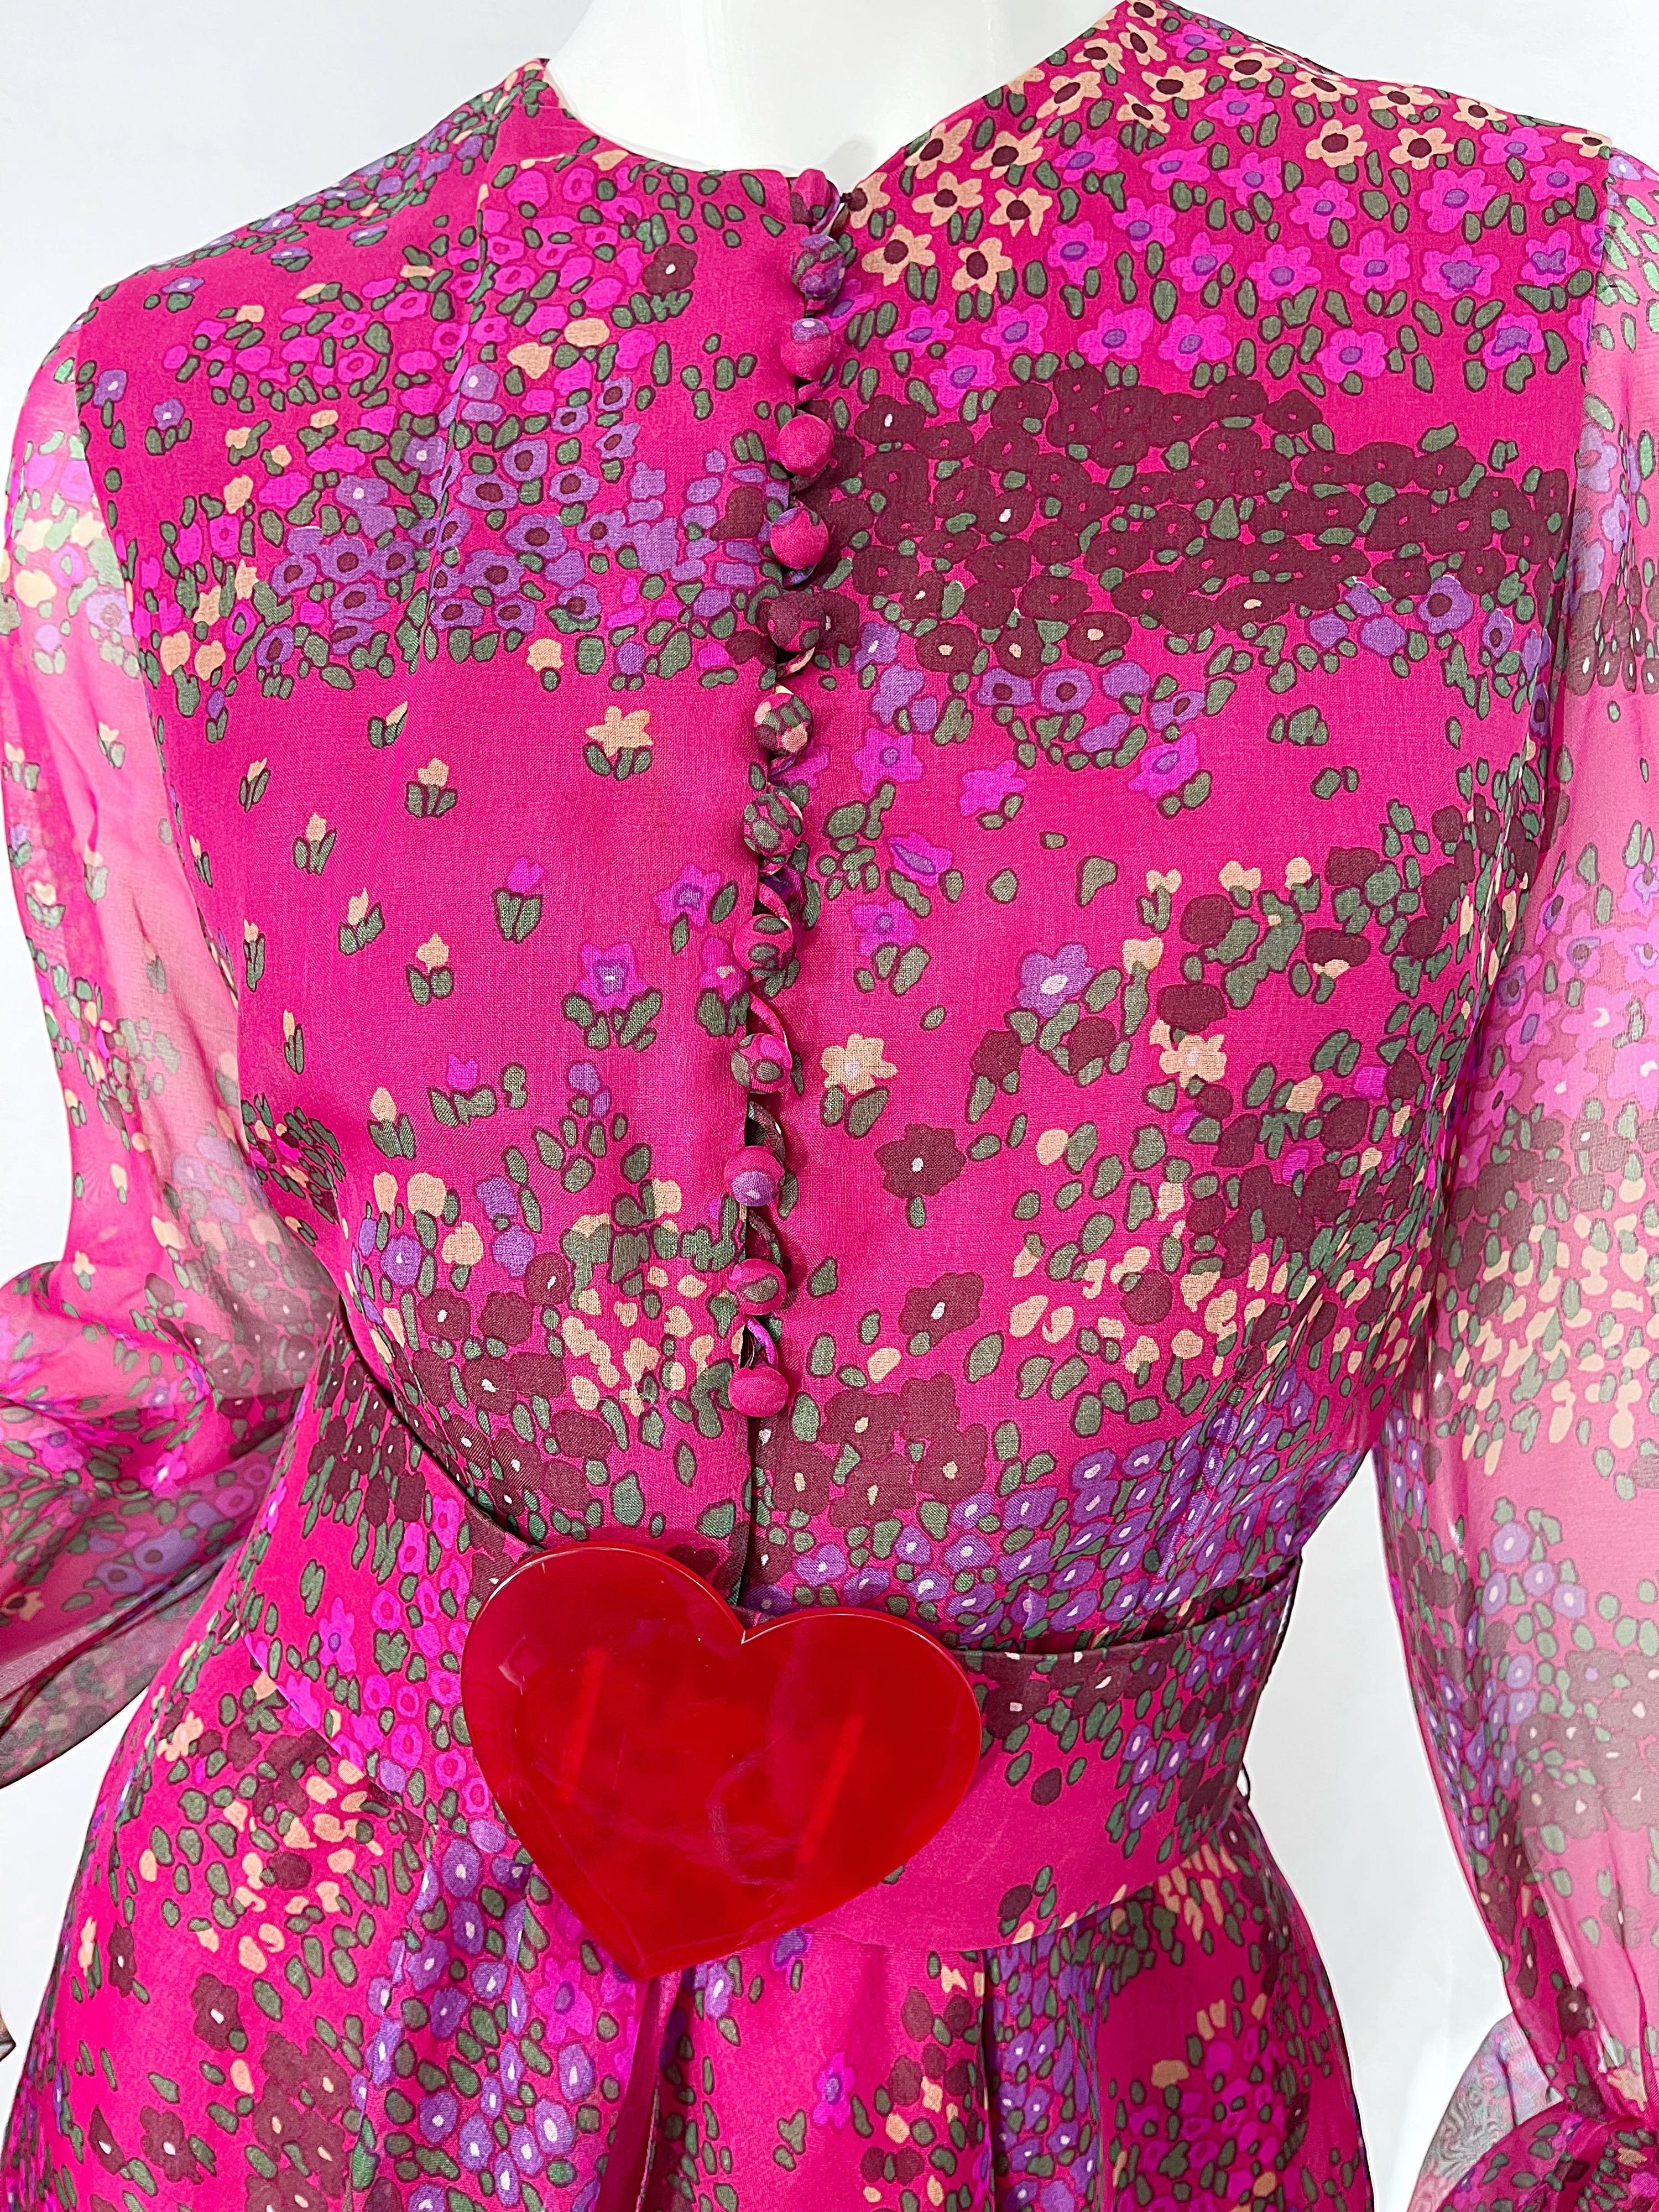 1960s Oscar de la Renta Pink Heart and Flower Print Vintage 60s Silk Dress For Sale 1